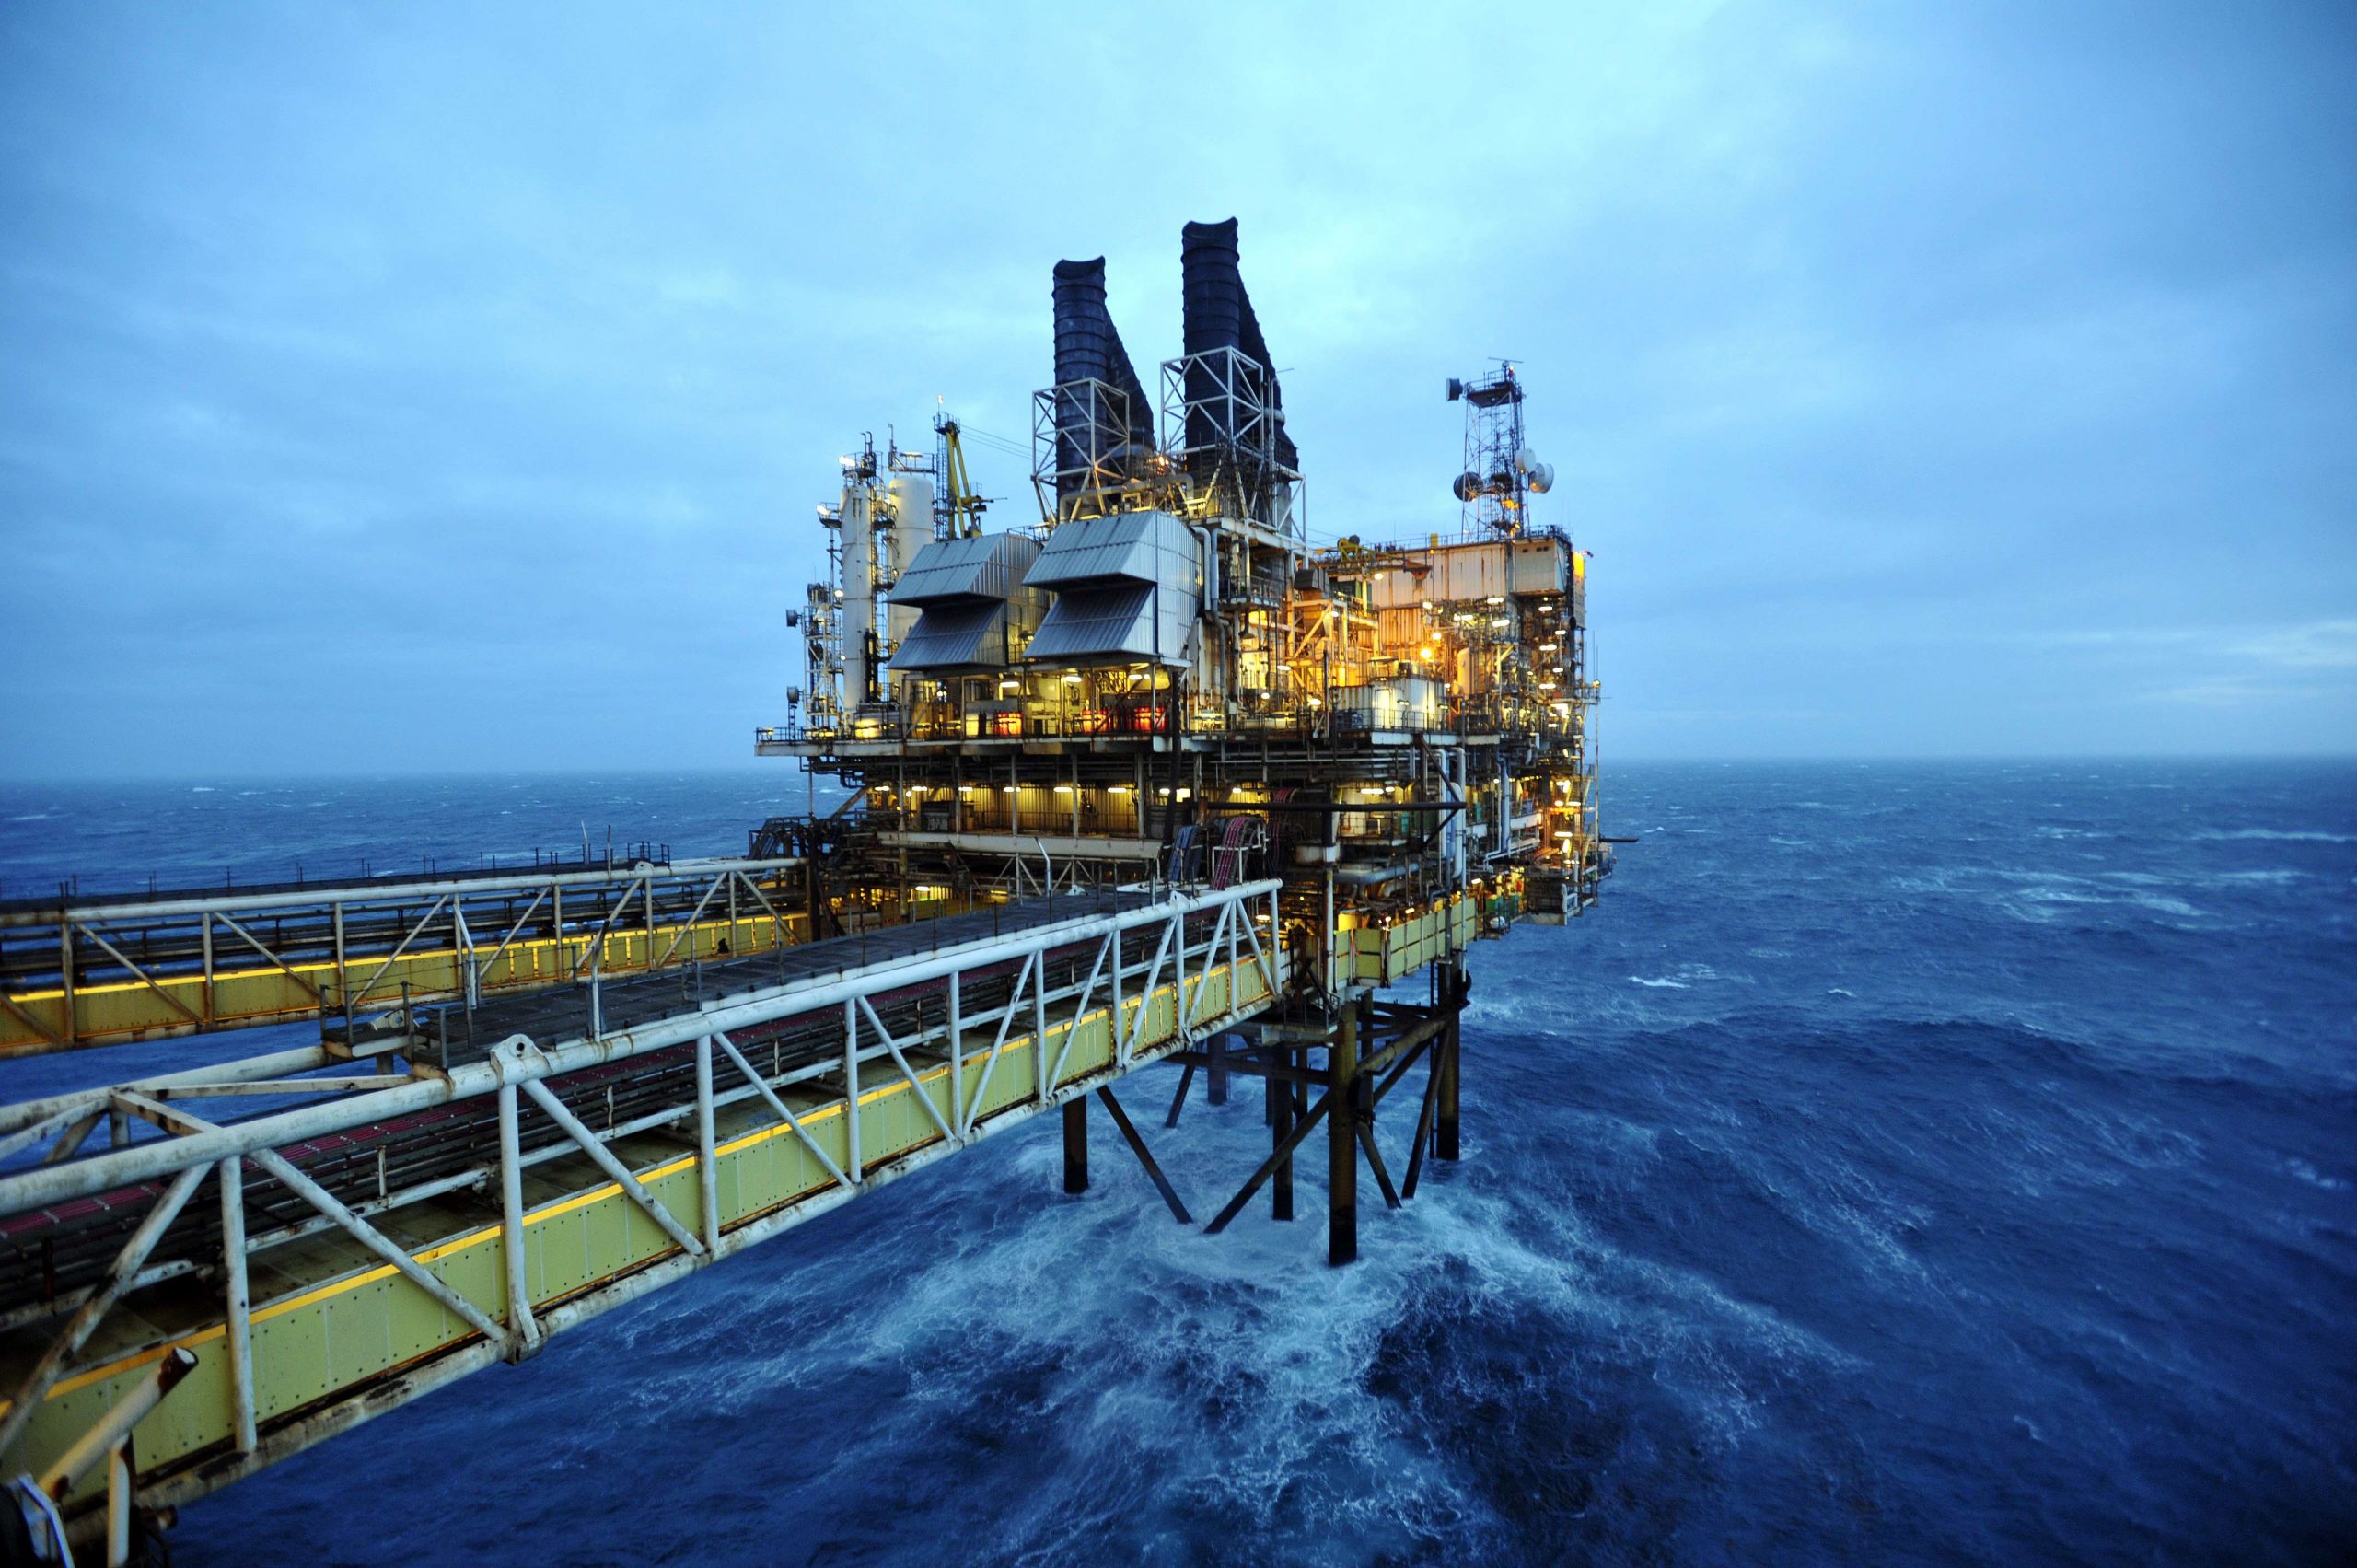  Raw material: presence of hydrocarbon in offshore oil blocks CI-504, CI-526, CI-706 and CI-708 